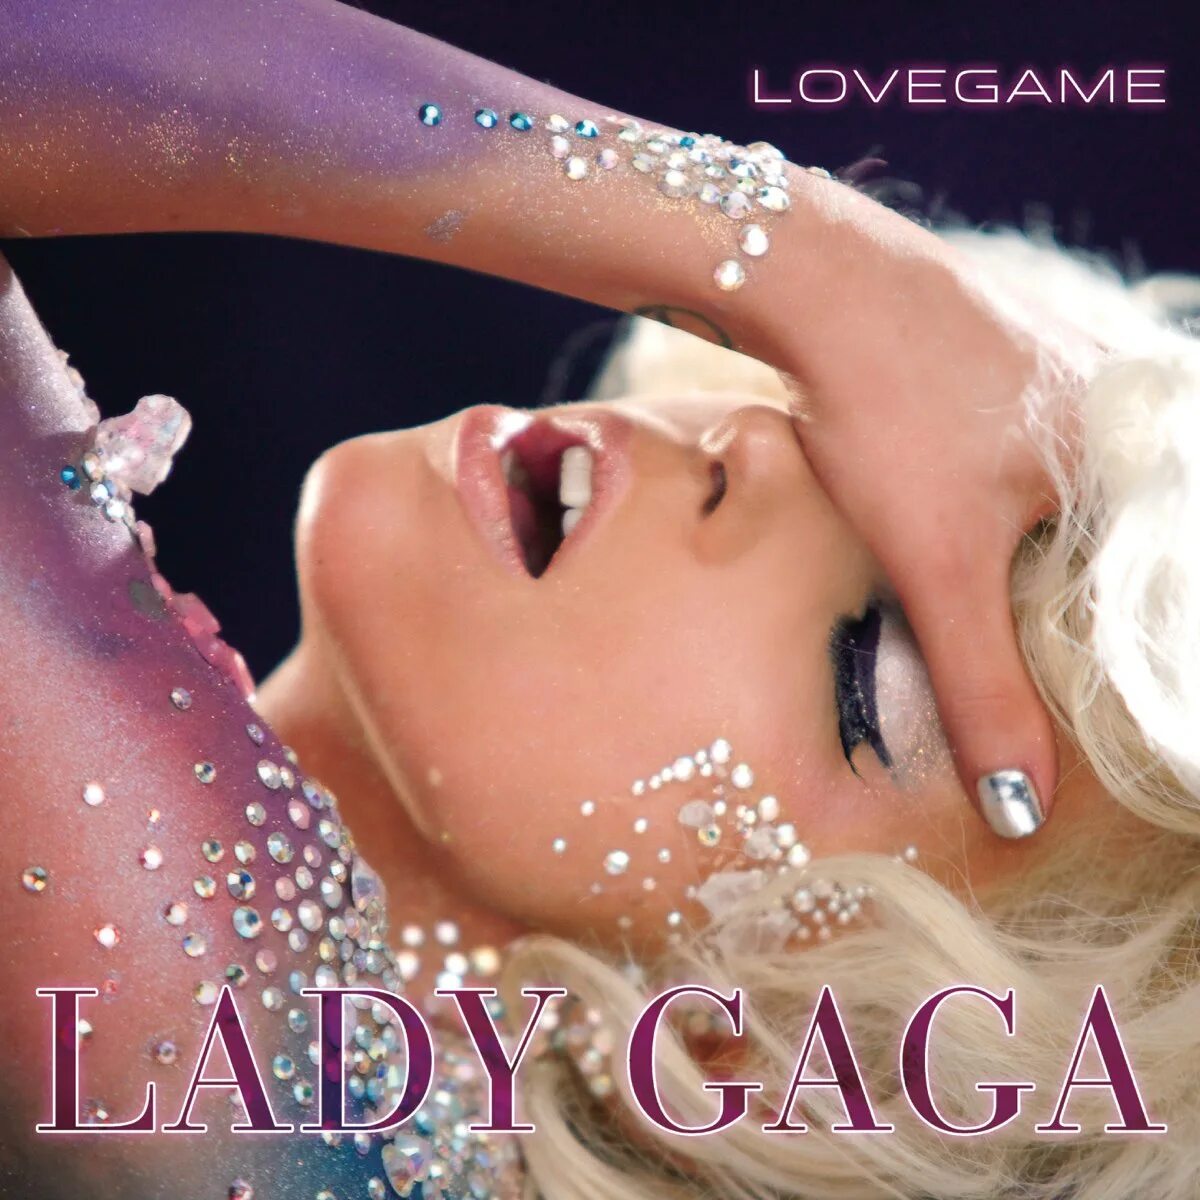 Lady Gaga LOVEGAME обложка. LOVEGAME леди Гага. Lady Gaga Love game. LOVEGAME Lady Gaga альбом. Лов гейм гага